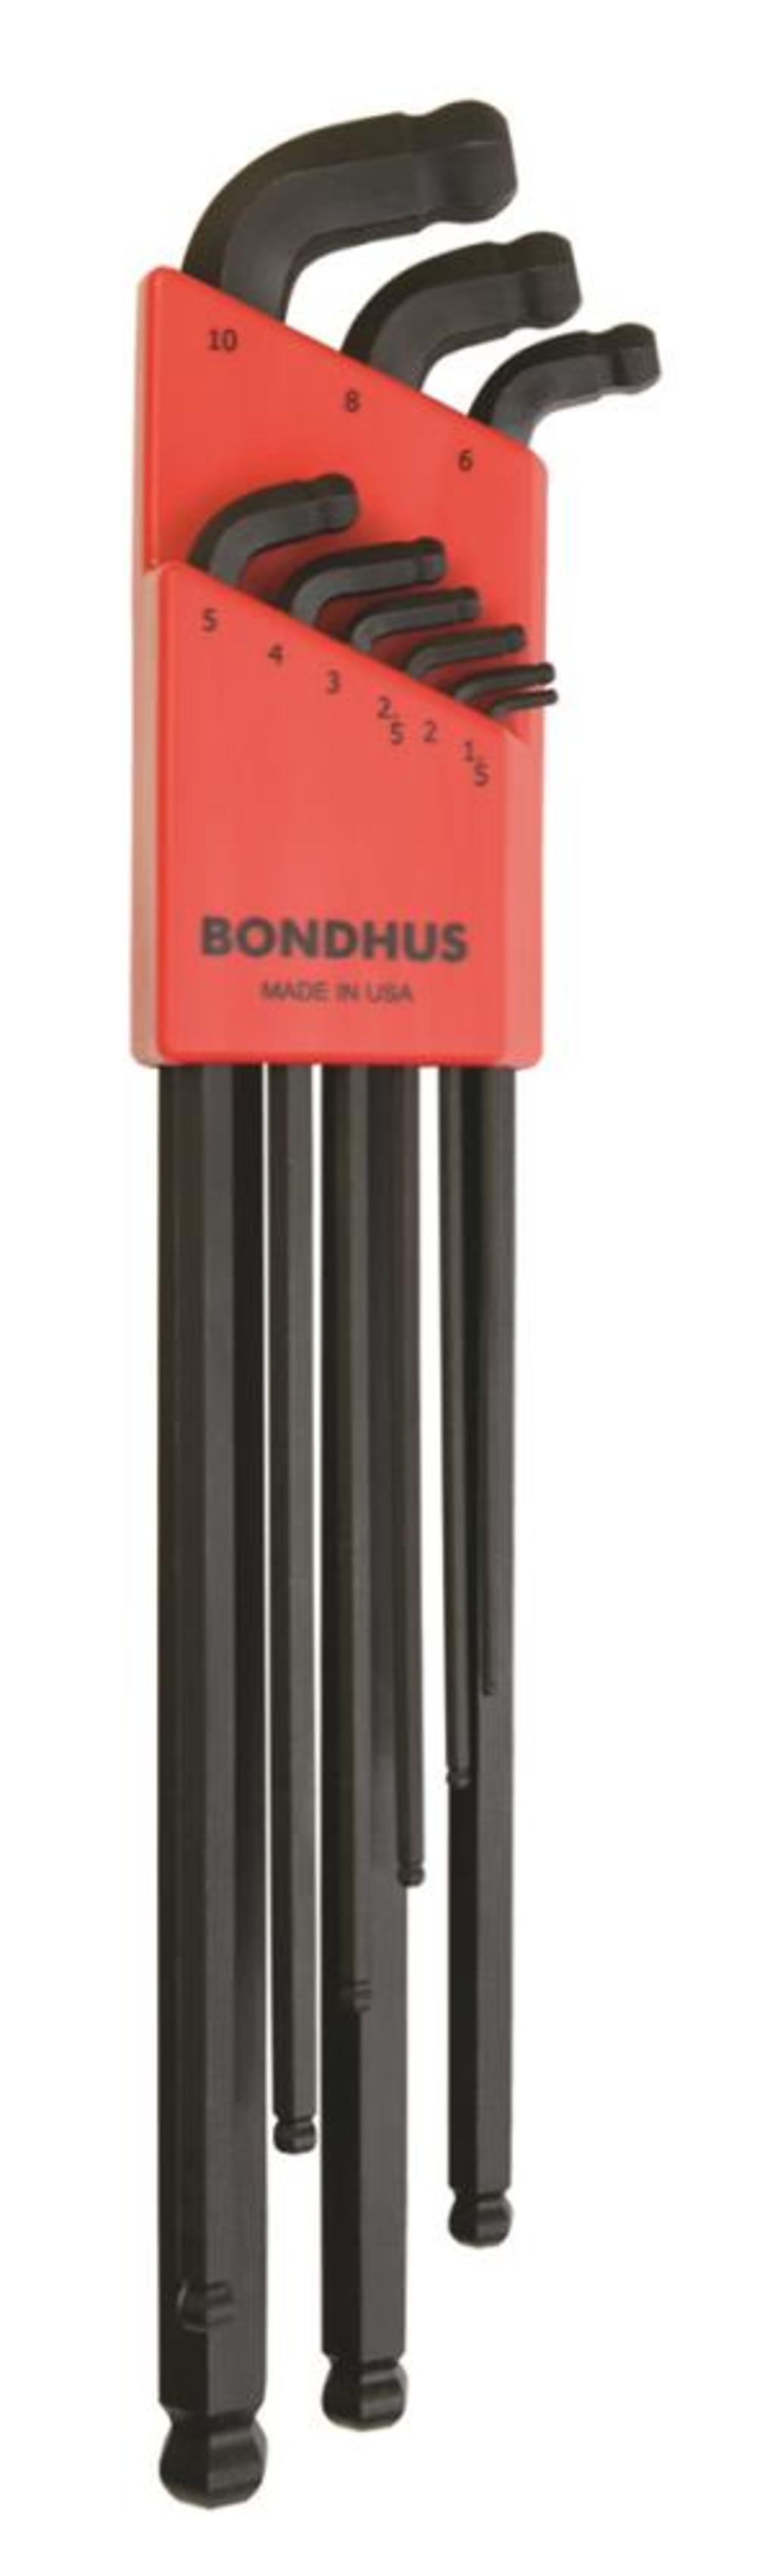 Bondhus L-Shaped Hex Wrench 1.5mm